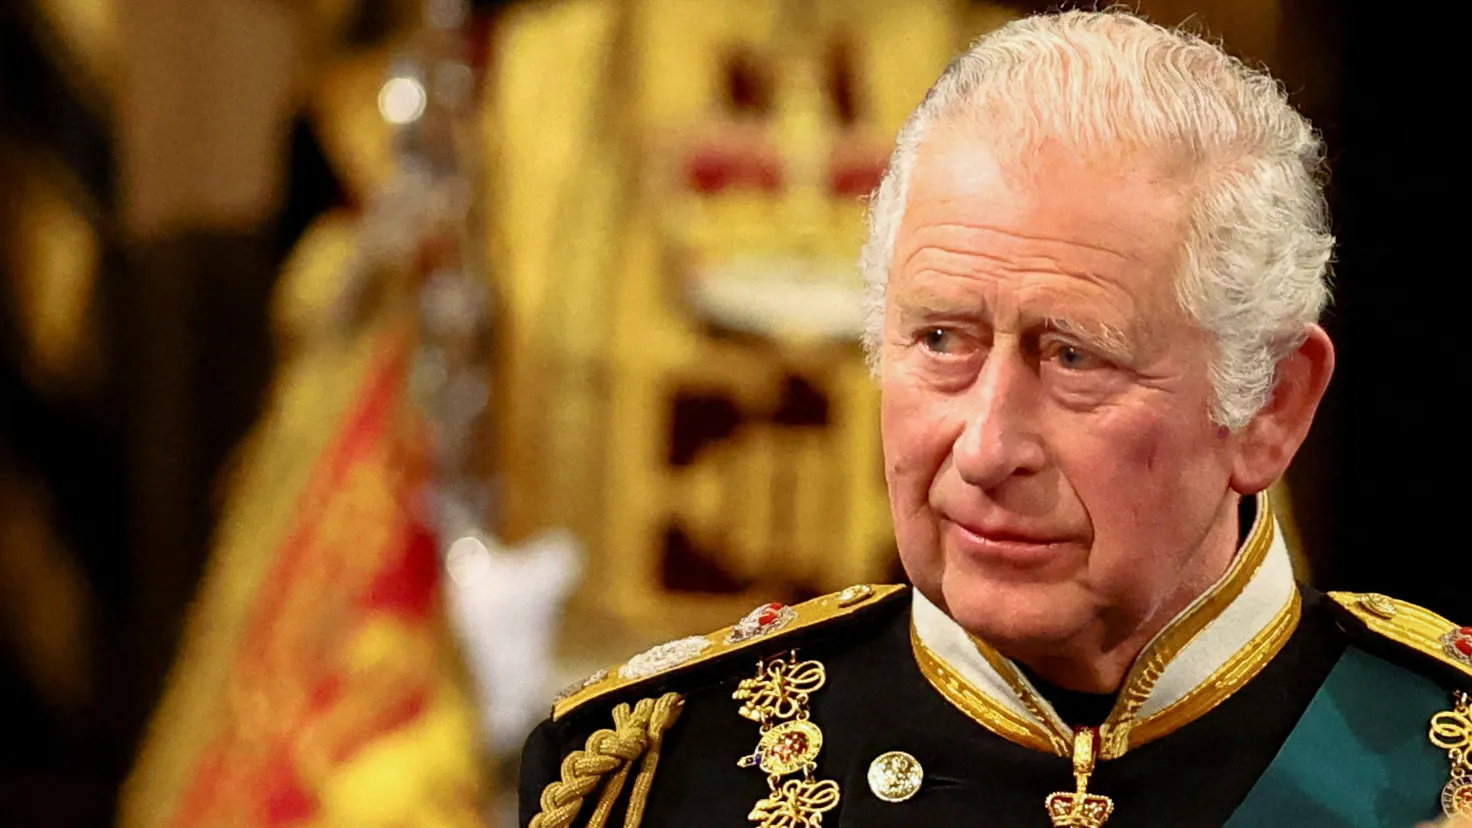 GettyImages 1240575670 - Le roi Charles III devient Capitaine général des Royal Marines